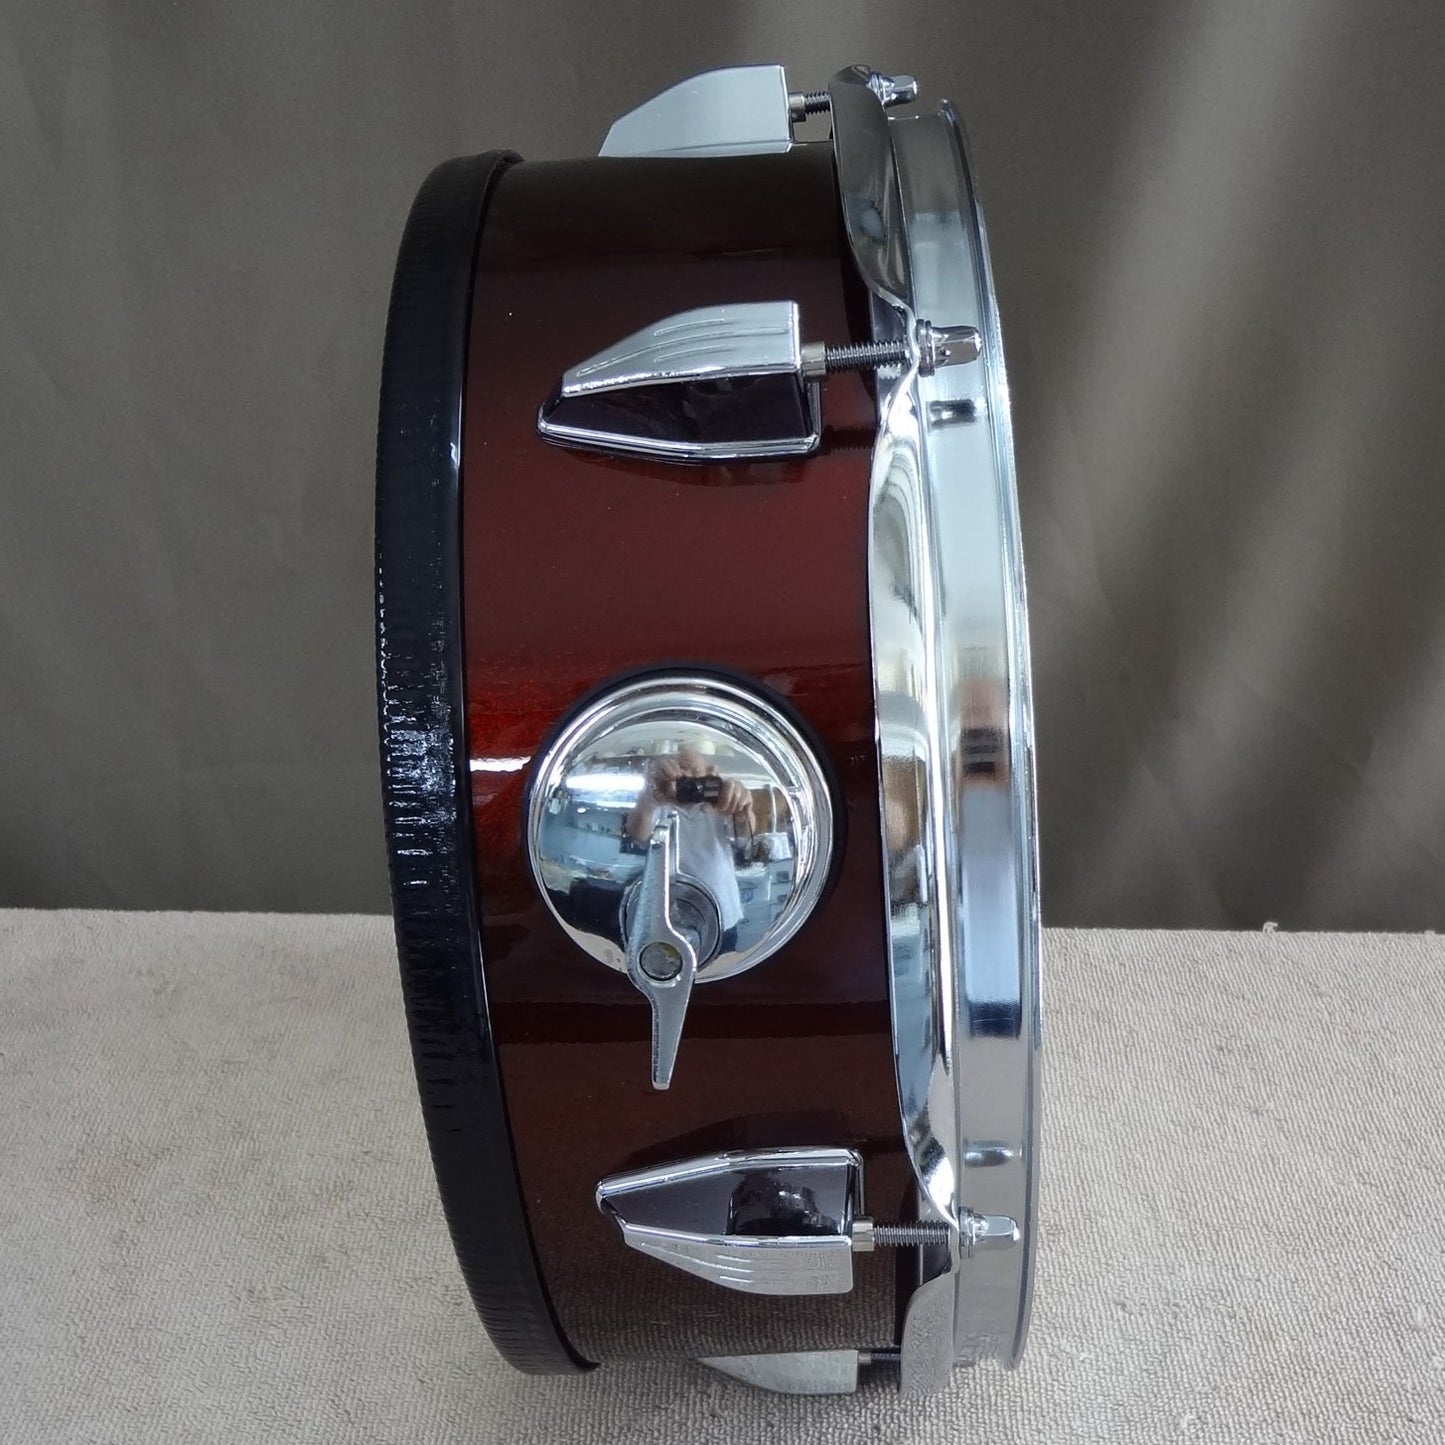 Refurbished 12 Inch Custom Built Electronic Snare Drum - Wine Red Metallic